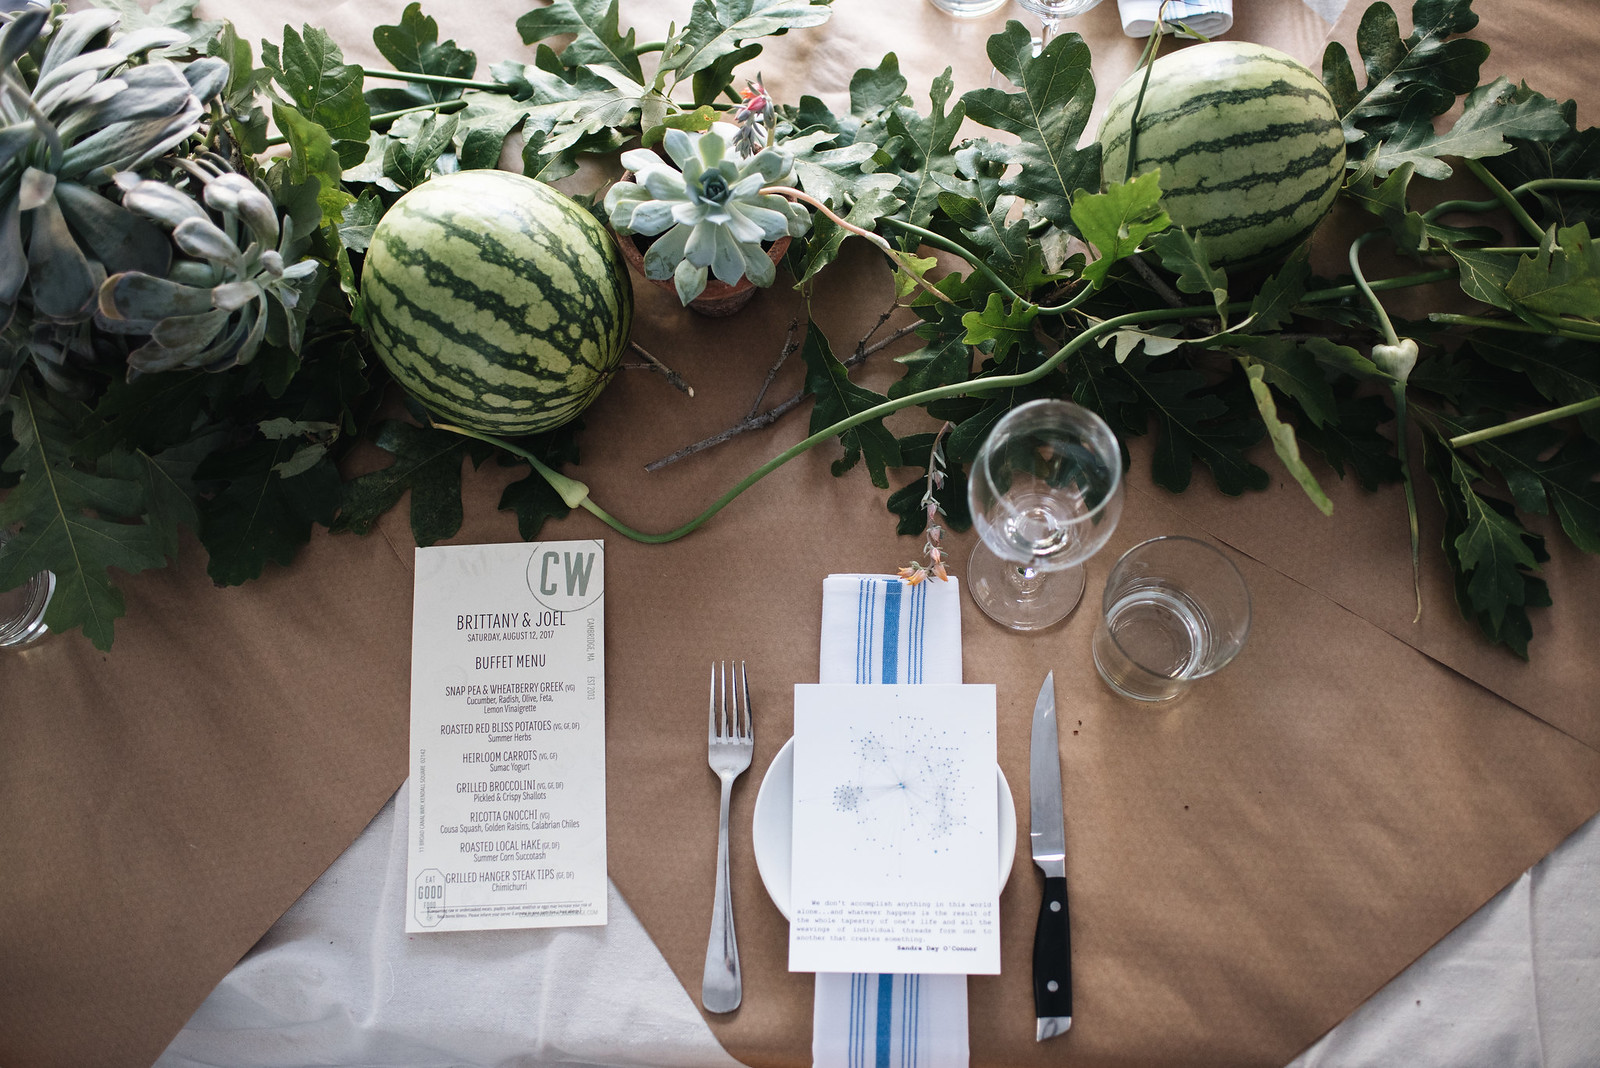 Watermelons, garlic, and succulents as wedding decor on juliettelauraphotography.blogspot.com